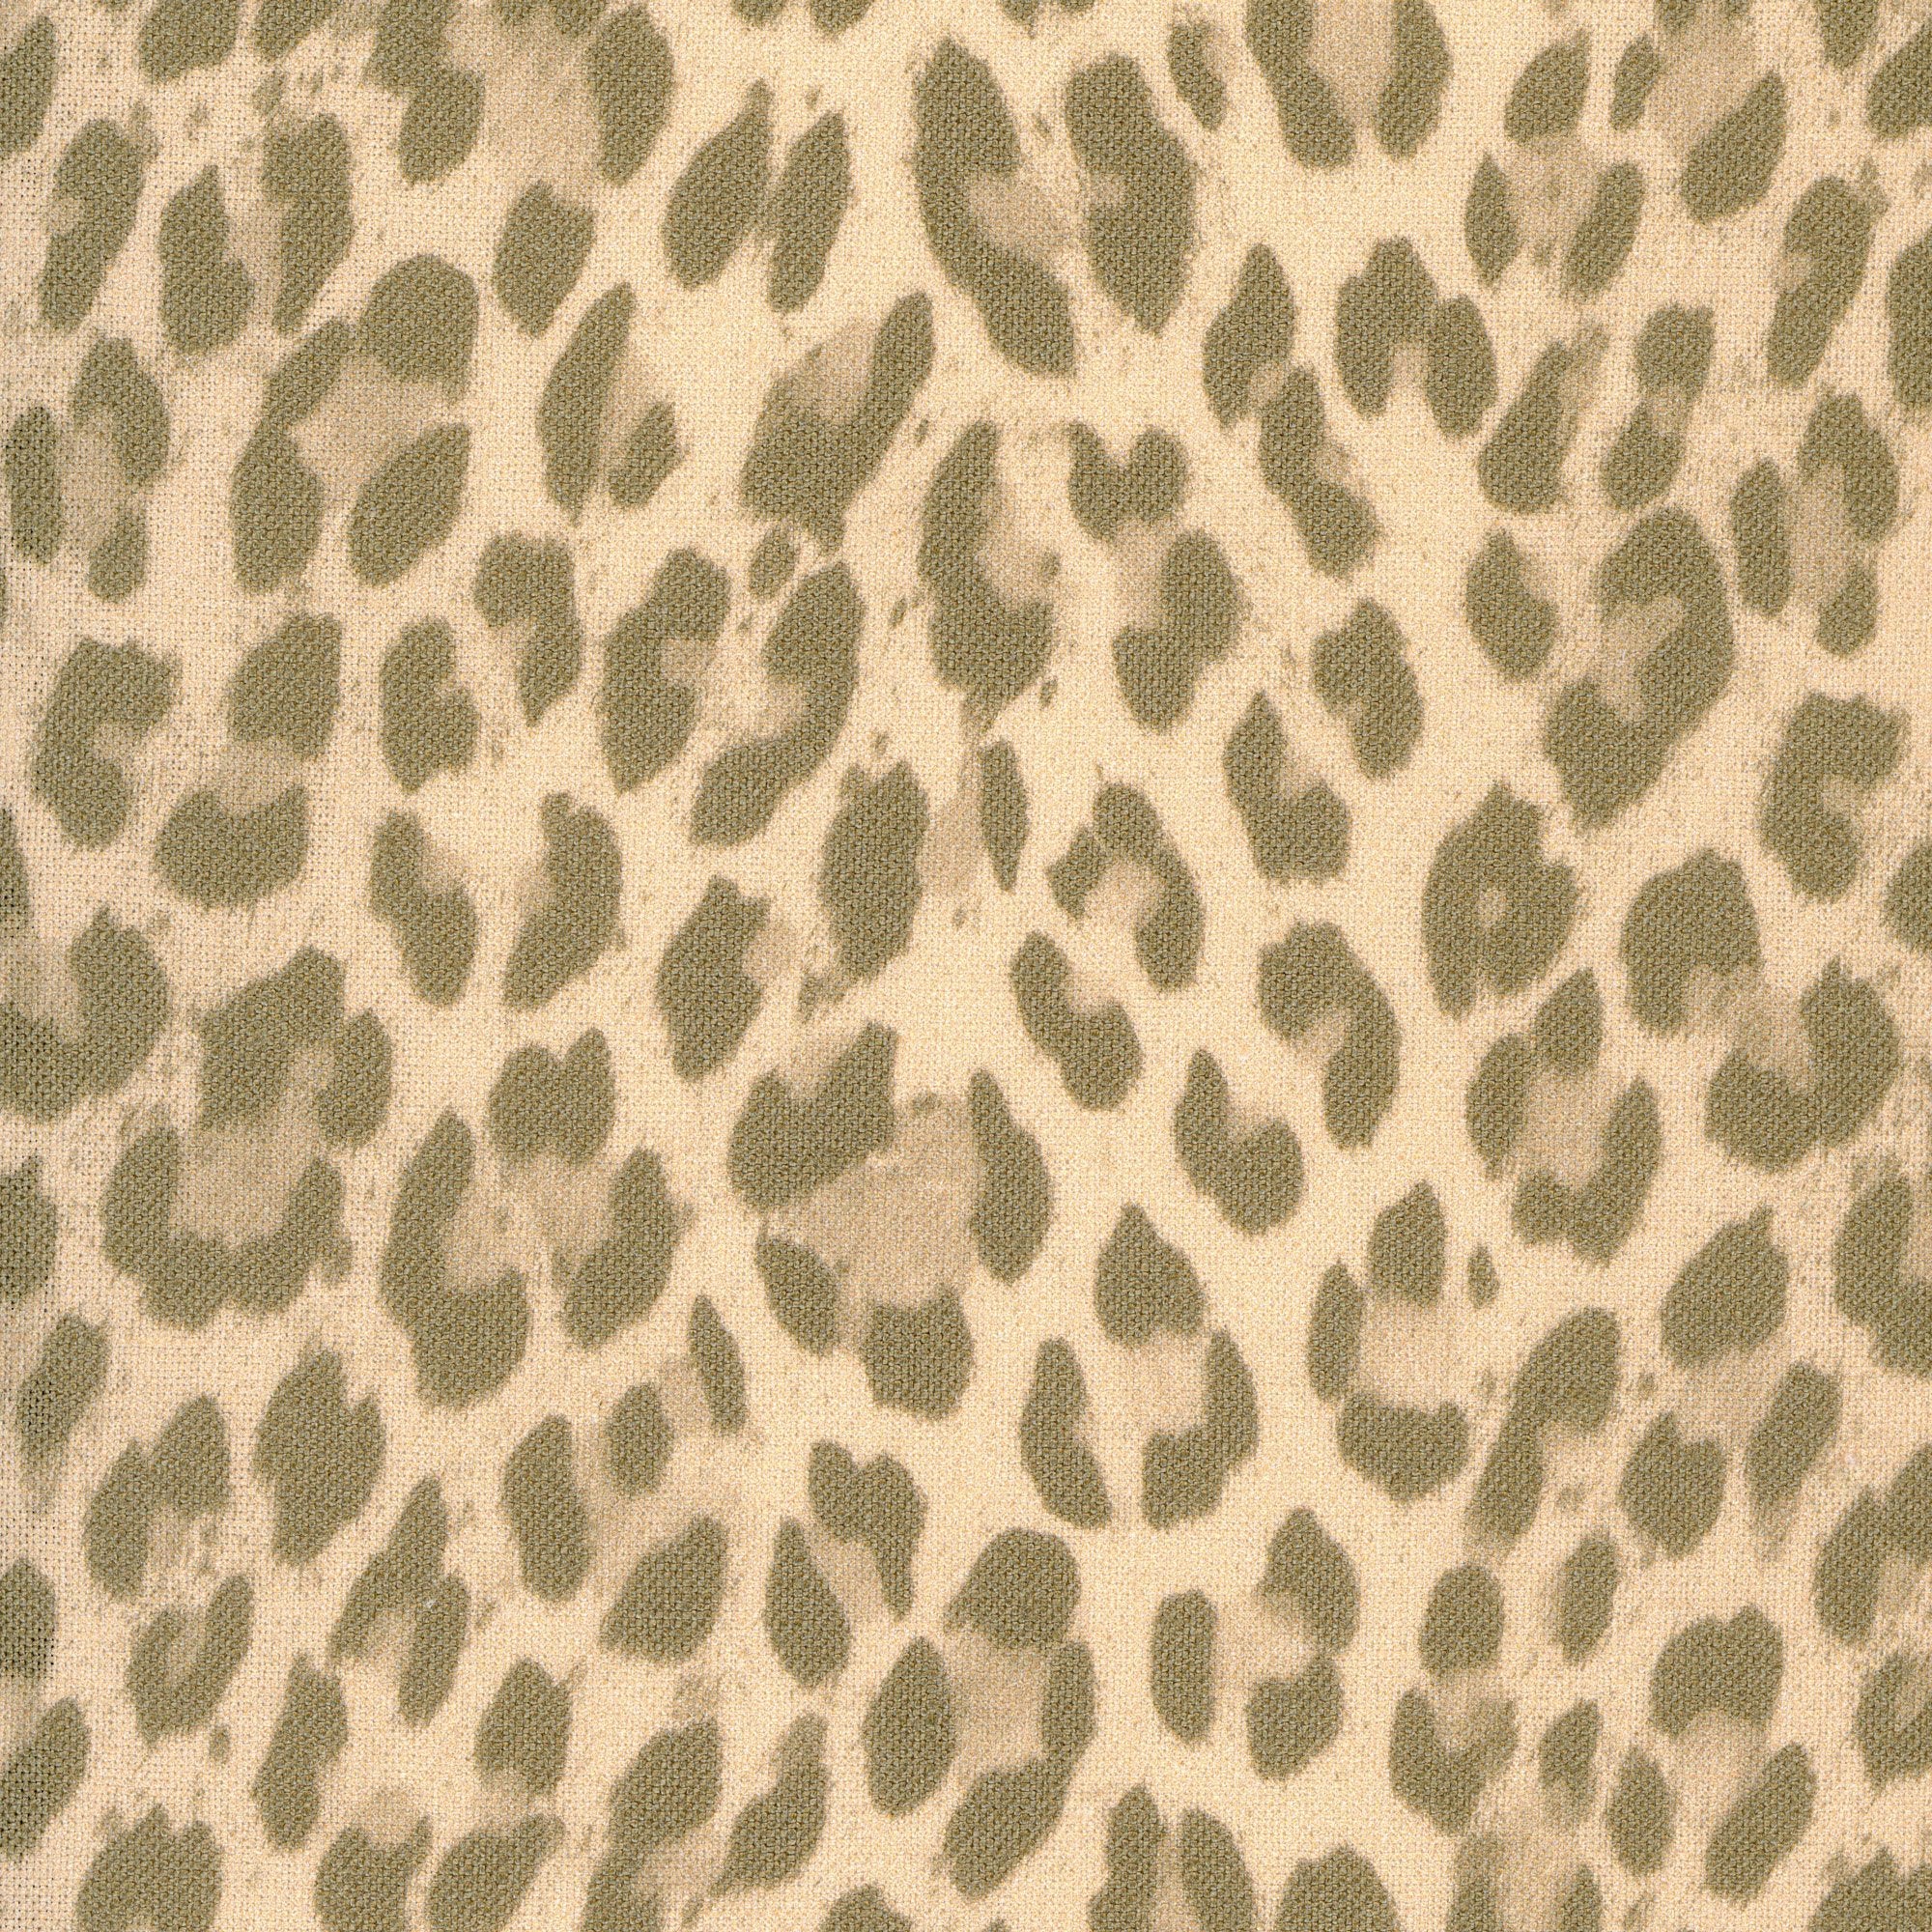 Leopard - Sorbet